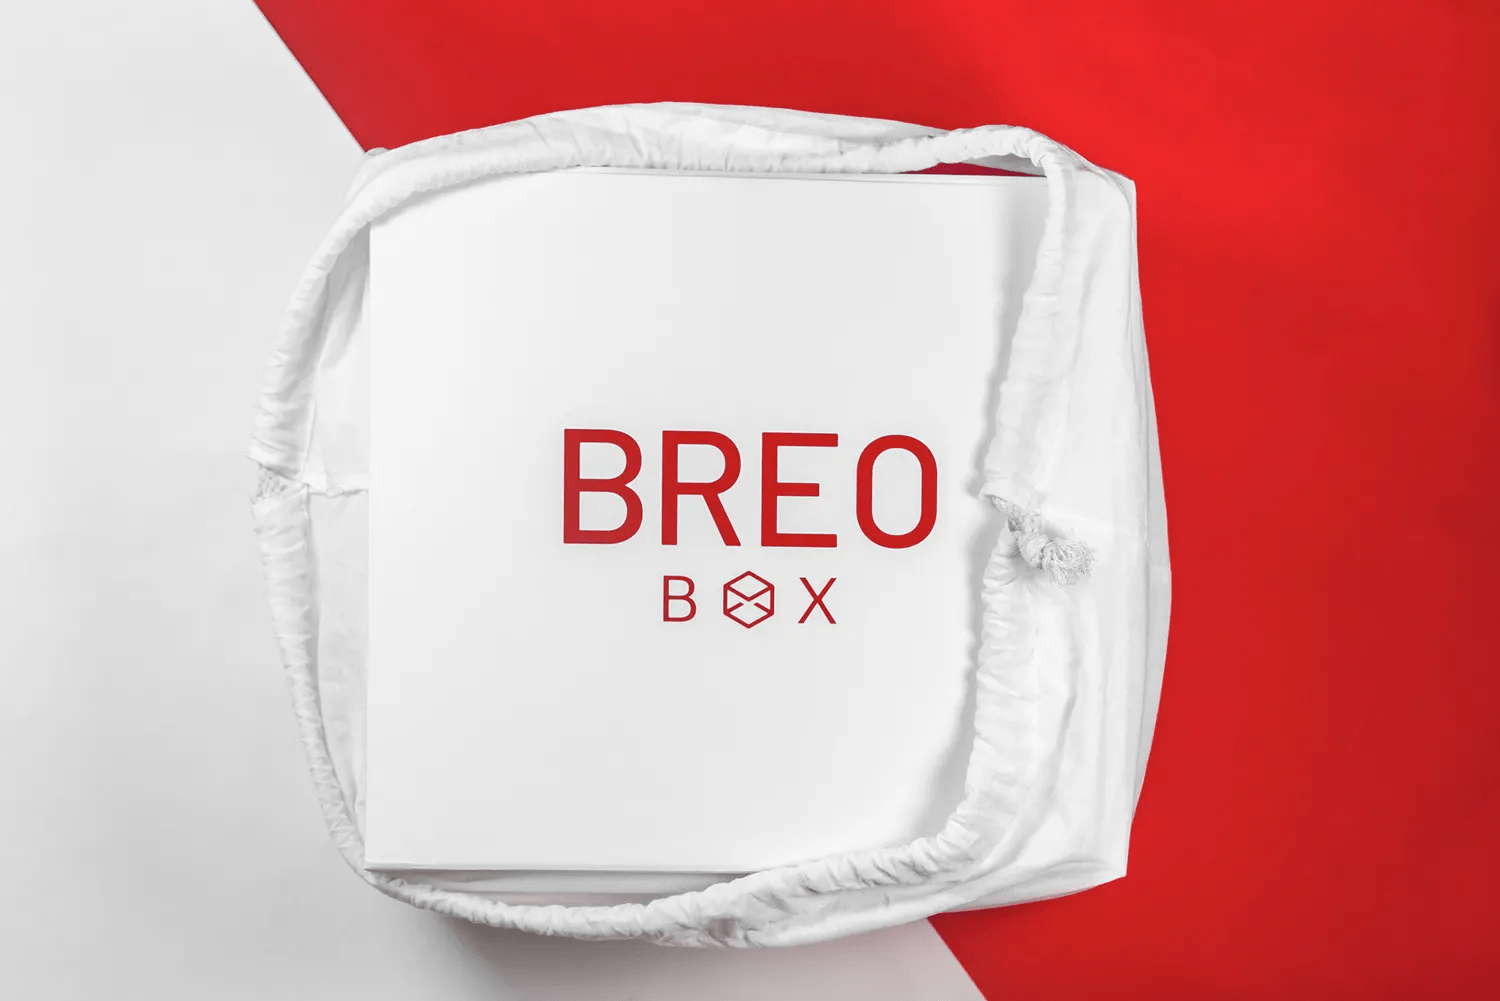 Breo Box April Fool’s Day Coupon Code – Save $35!